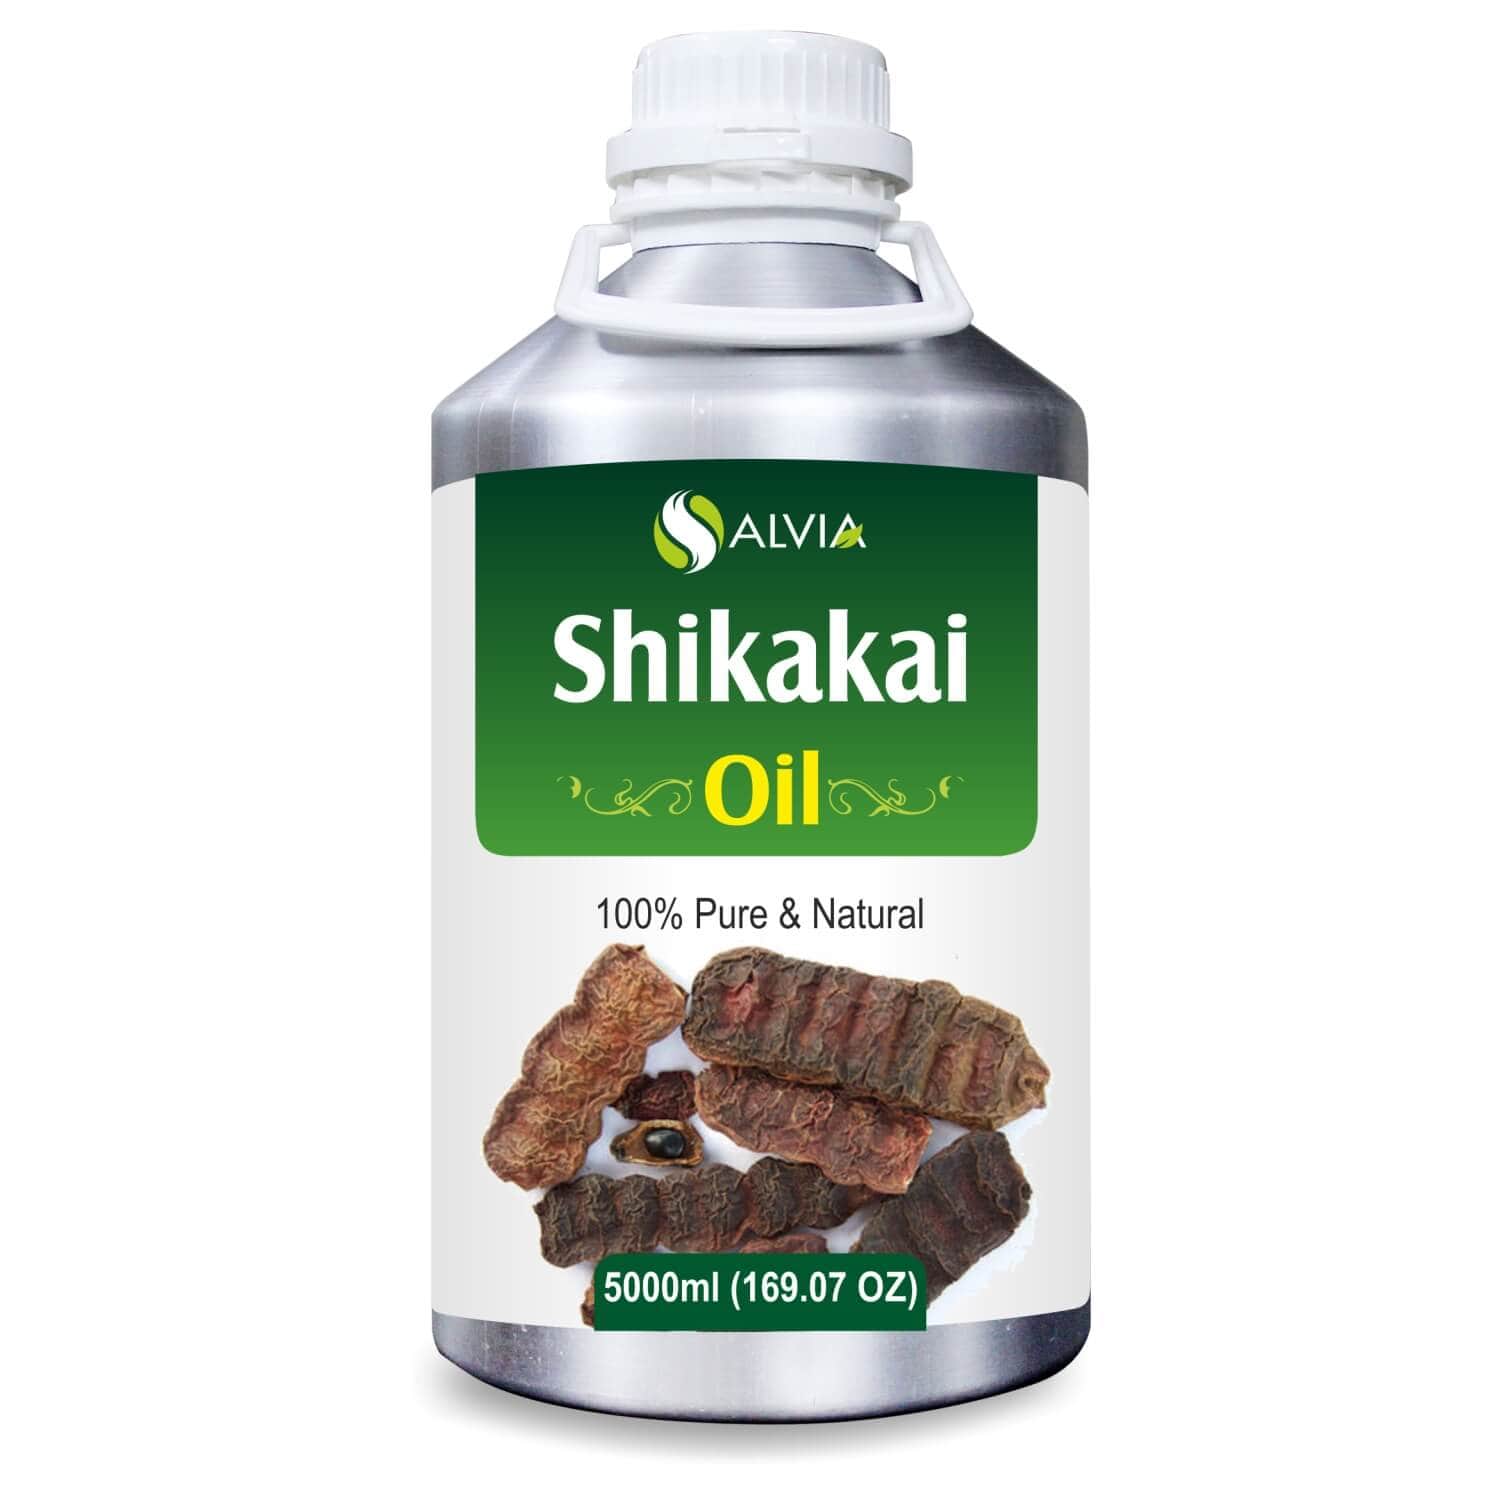 Salvia Infused Oils,Anti hair fall oil,Best Essential Oils for Hair 5000ml Shikakai Oil for Hair